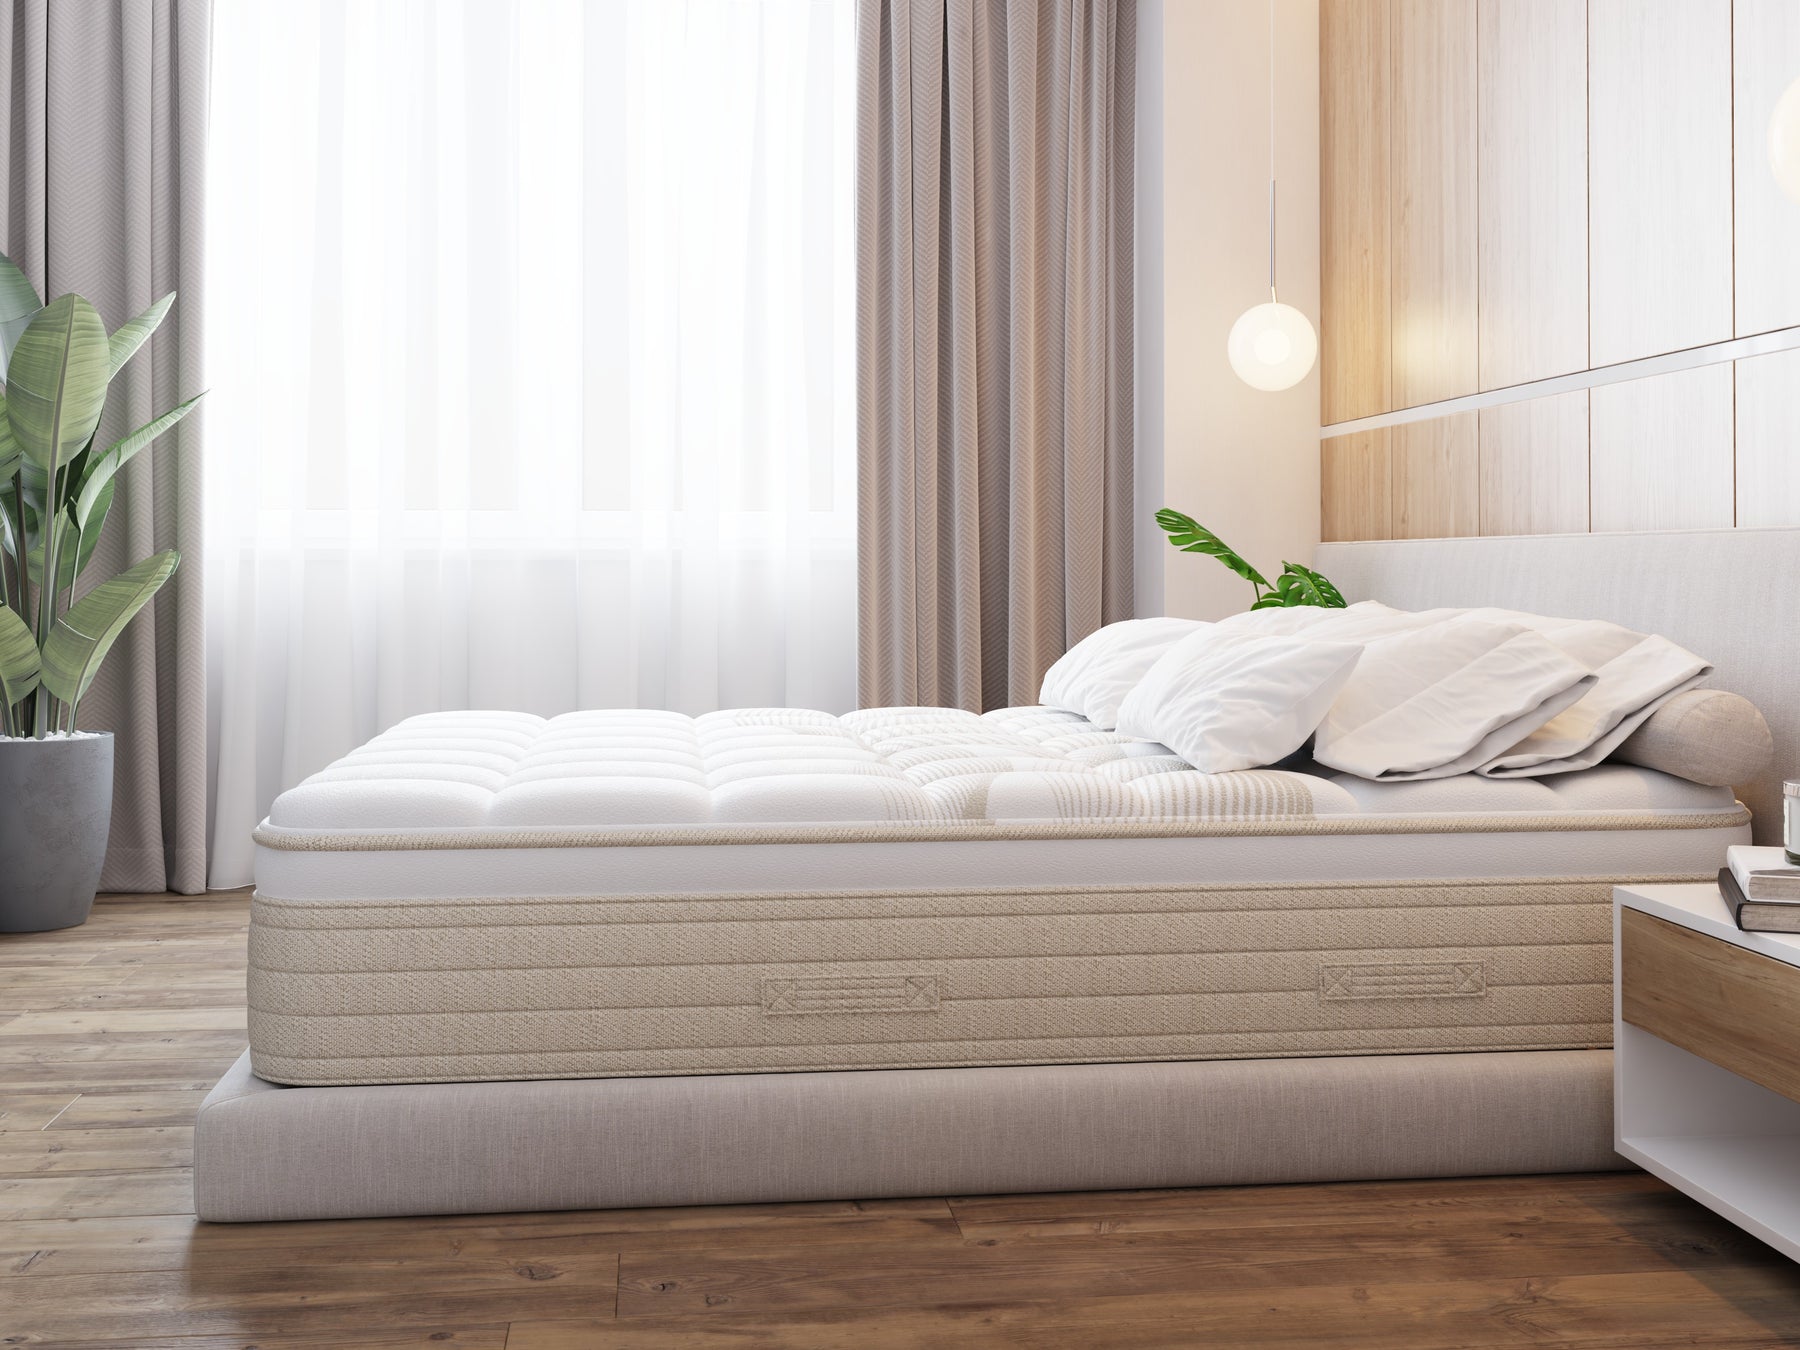 ethos organic mattress reviews